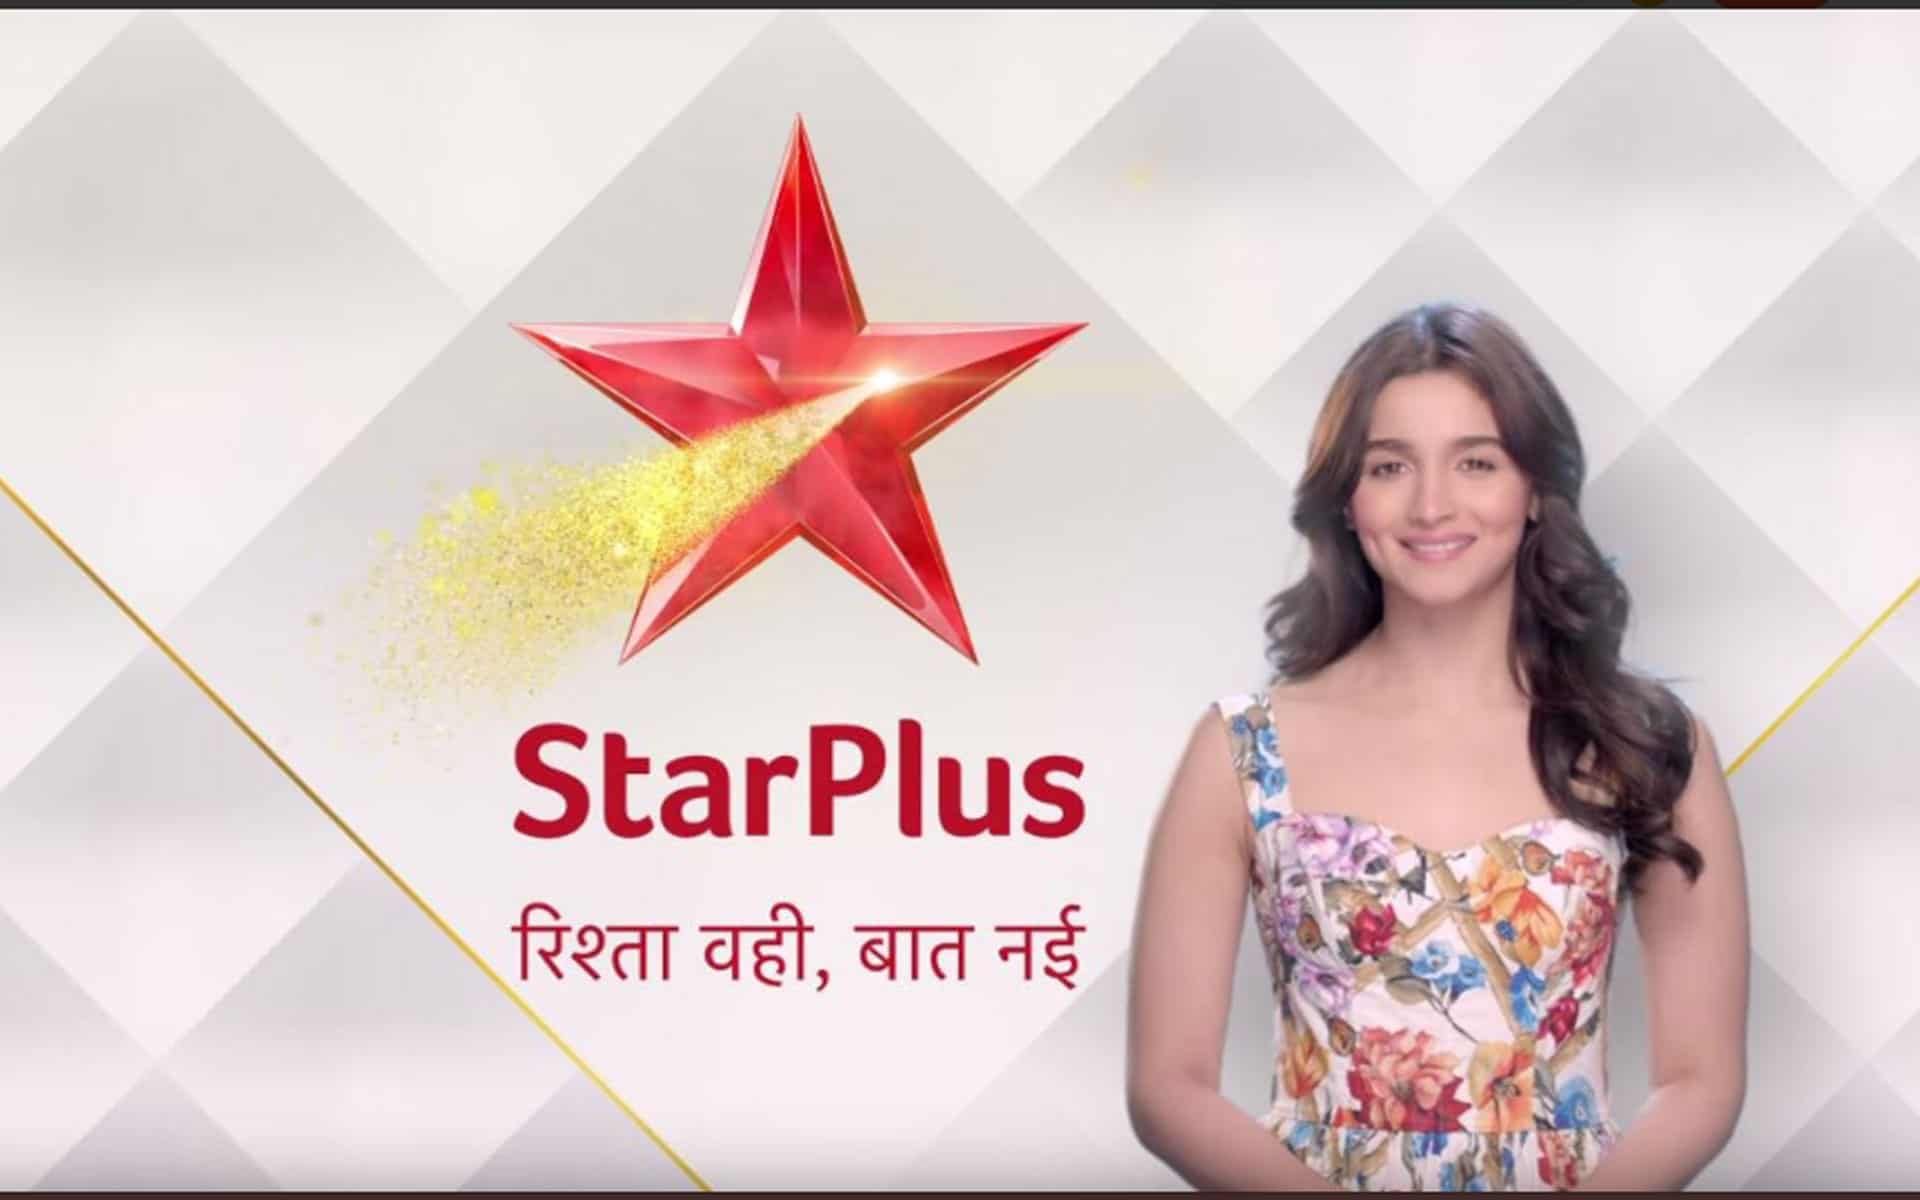 In Video: Alia Bhatt as Star Plus' new brand ambassador